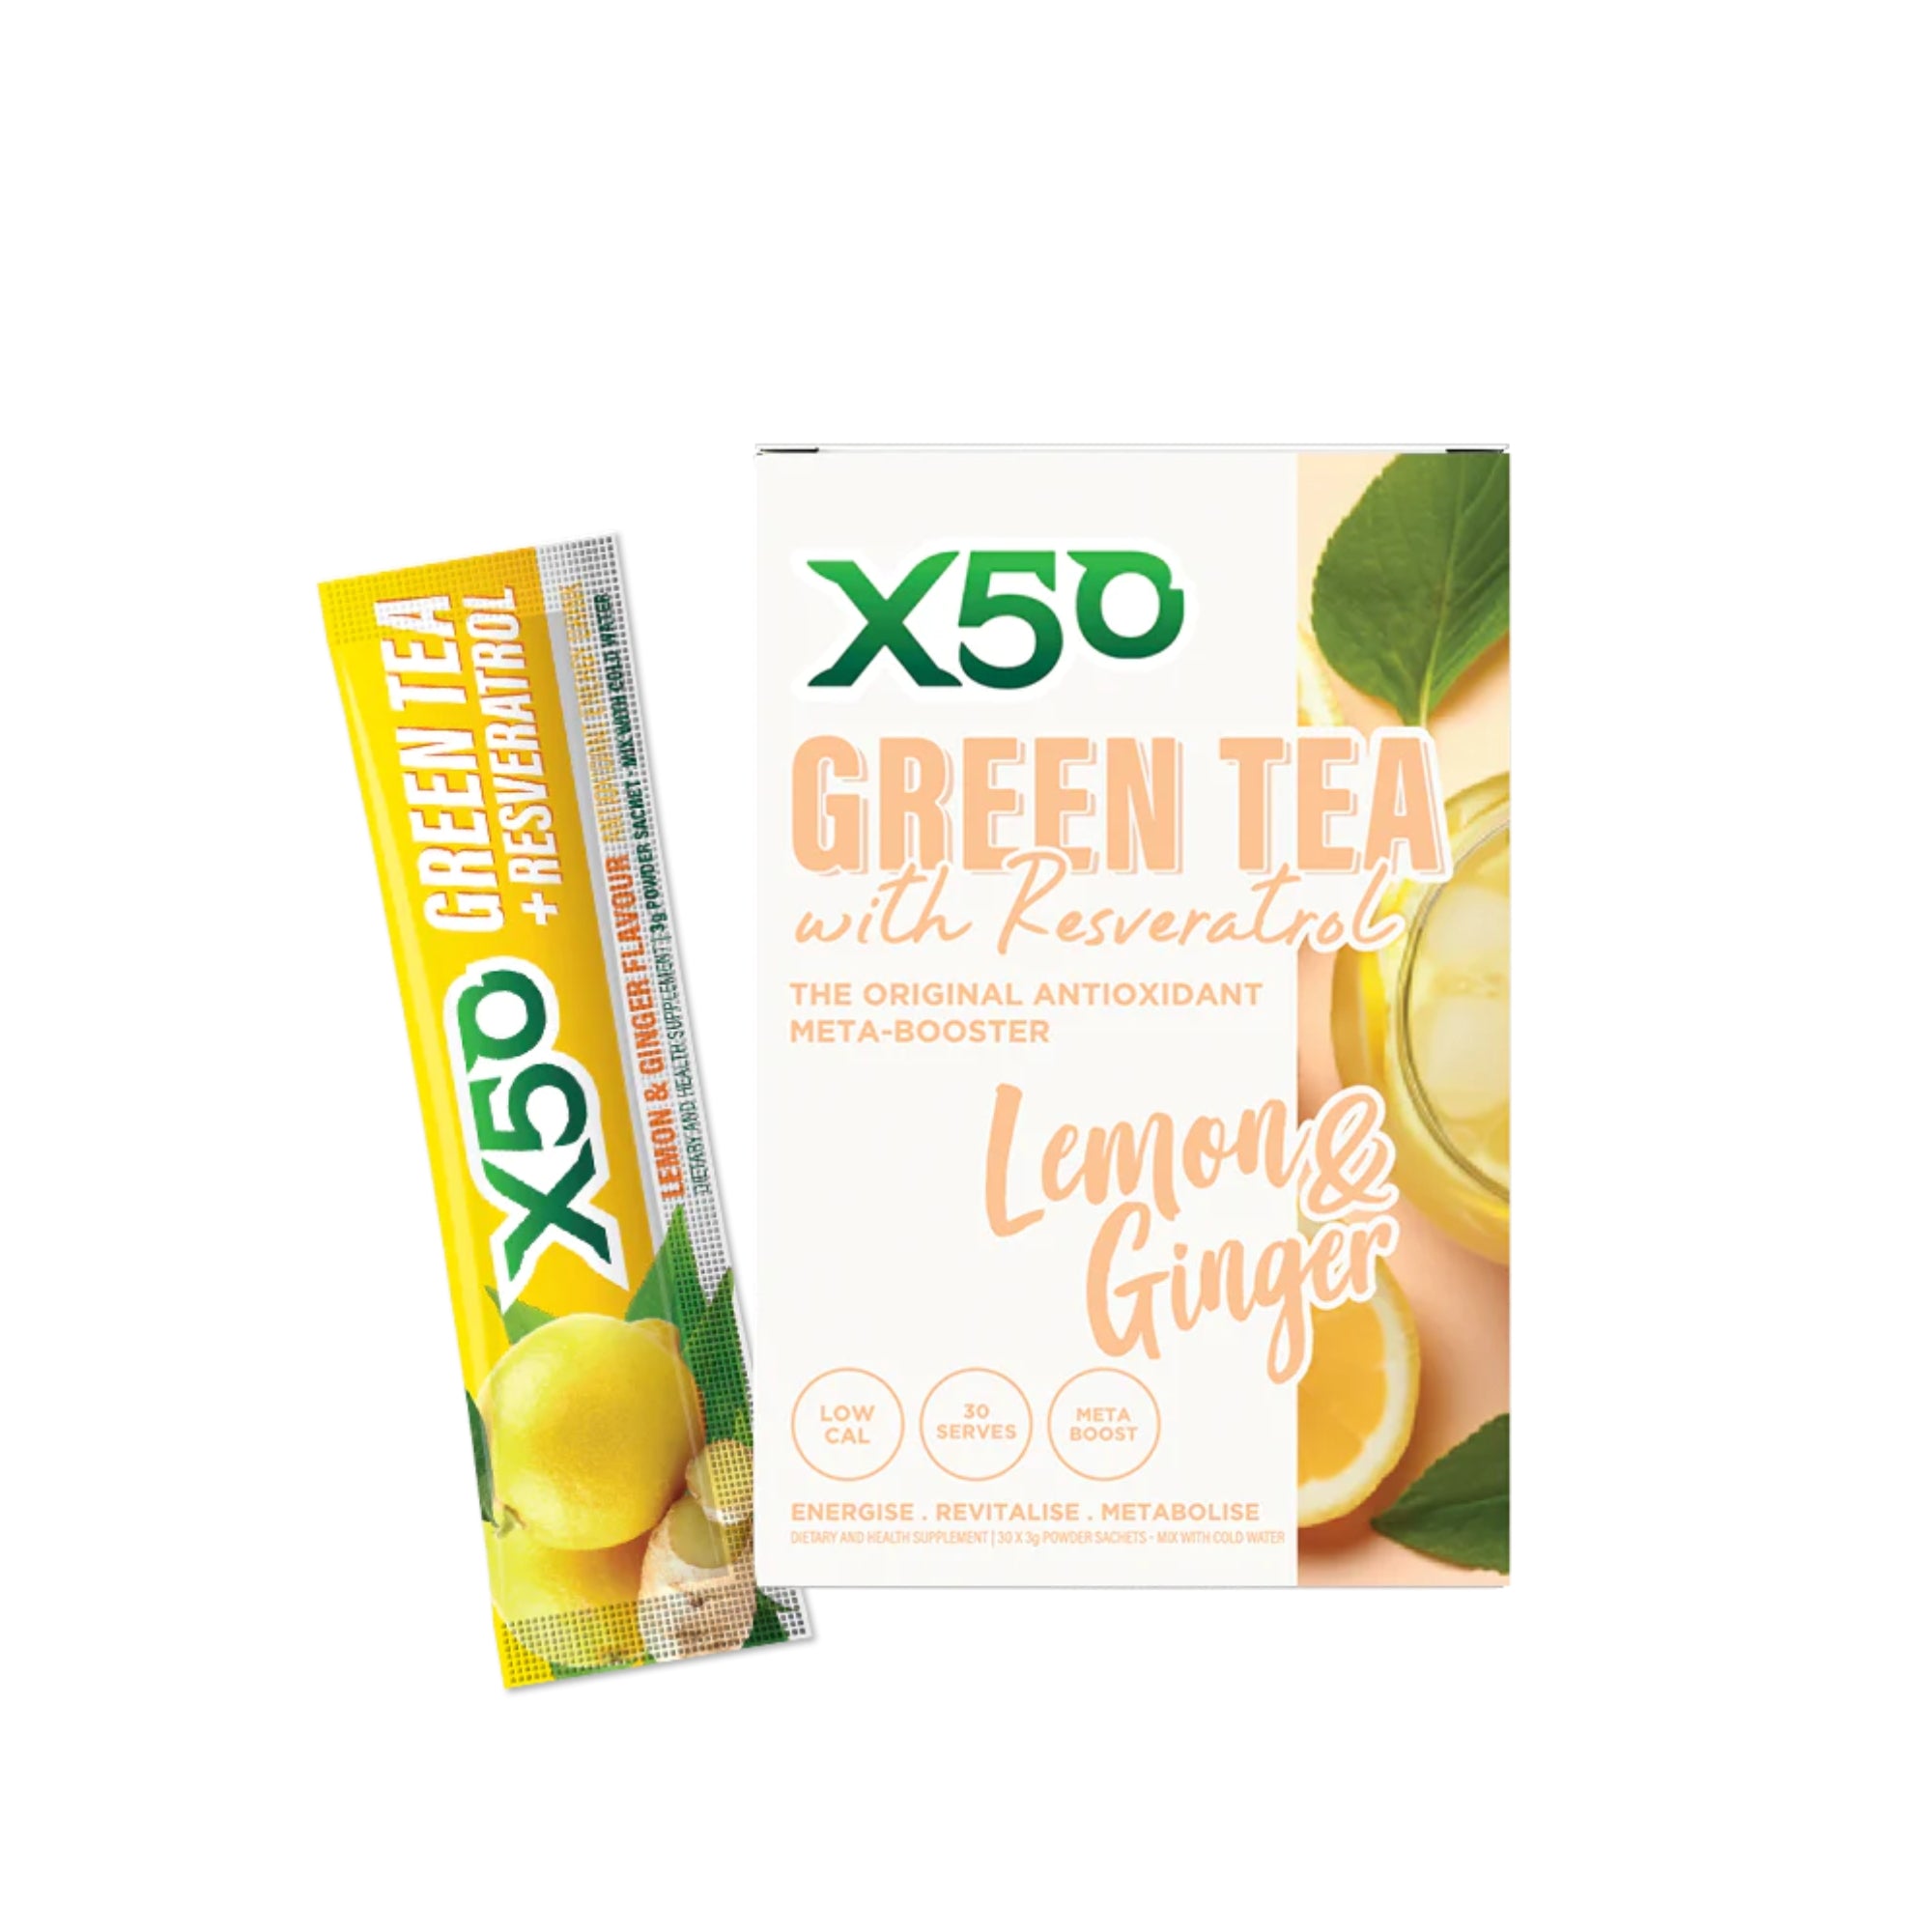 X50 GreenTea - 30 Serve Lemon and Ginger